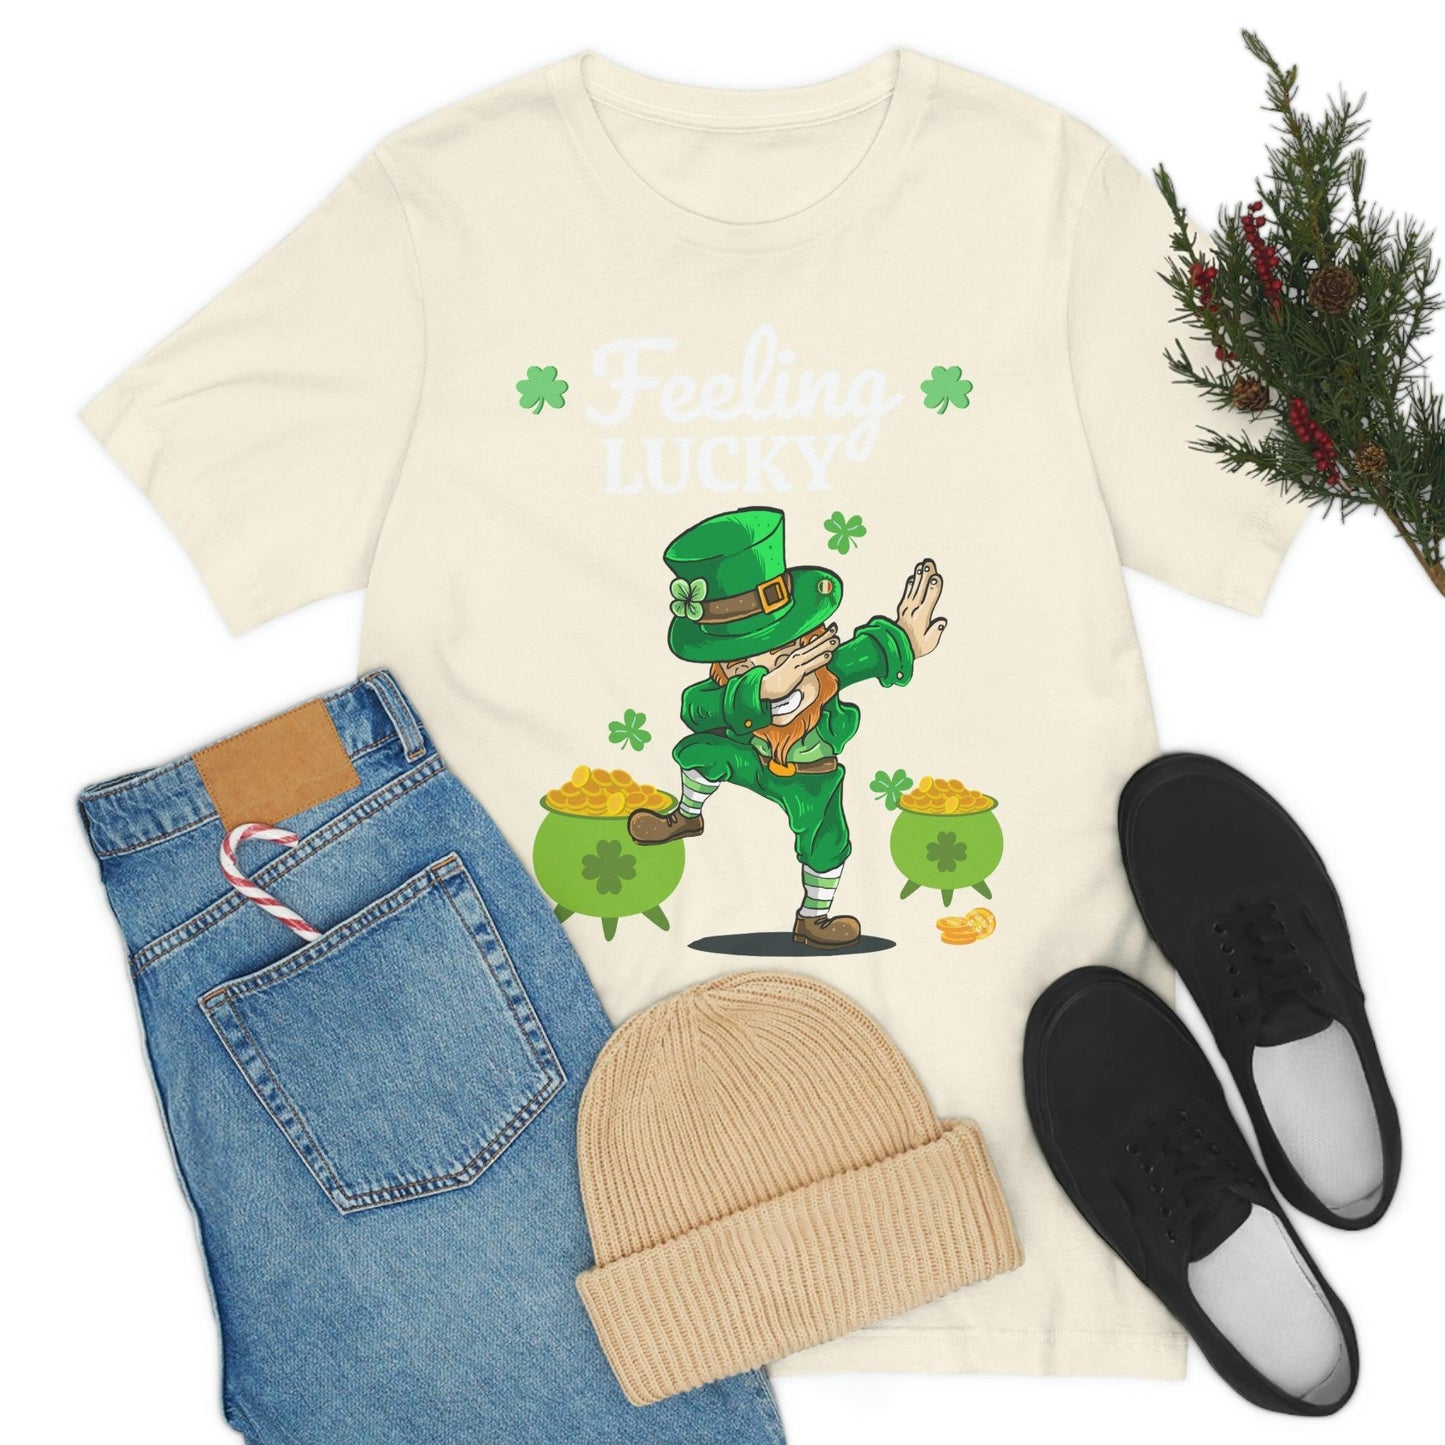 St Patrick's Day shirt feeling Lucky Funny St Paddys day shirt Lucky Shamrock shirt shenanigans shirt St Patricks day gift Irish shirts